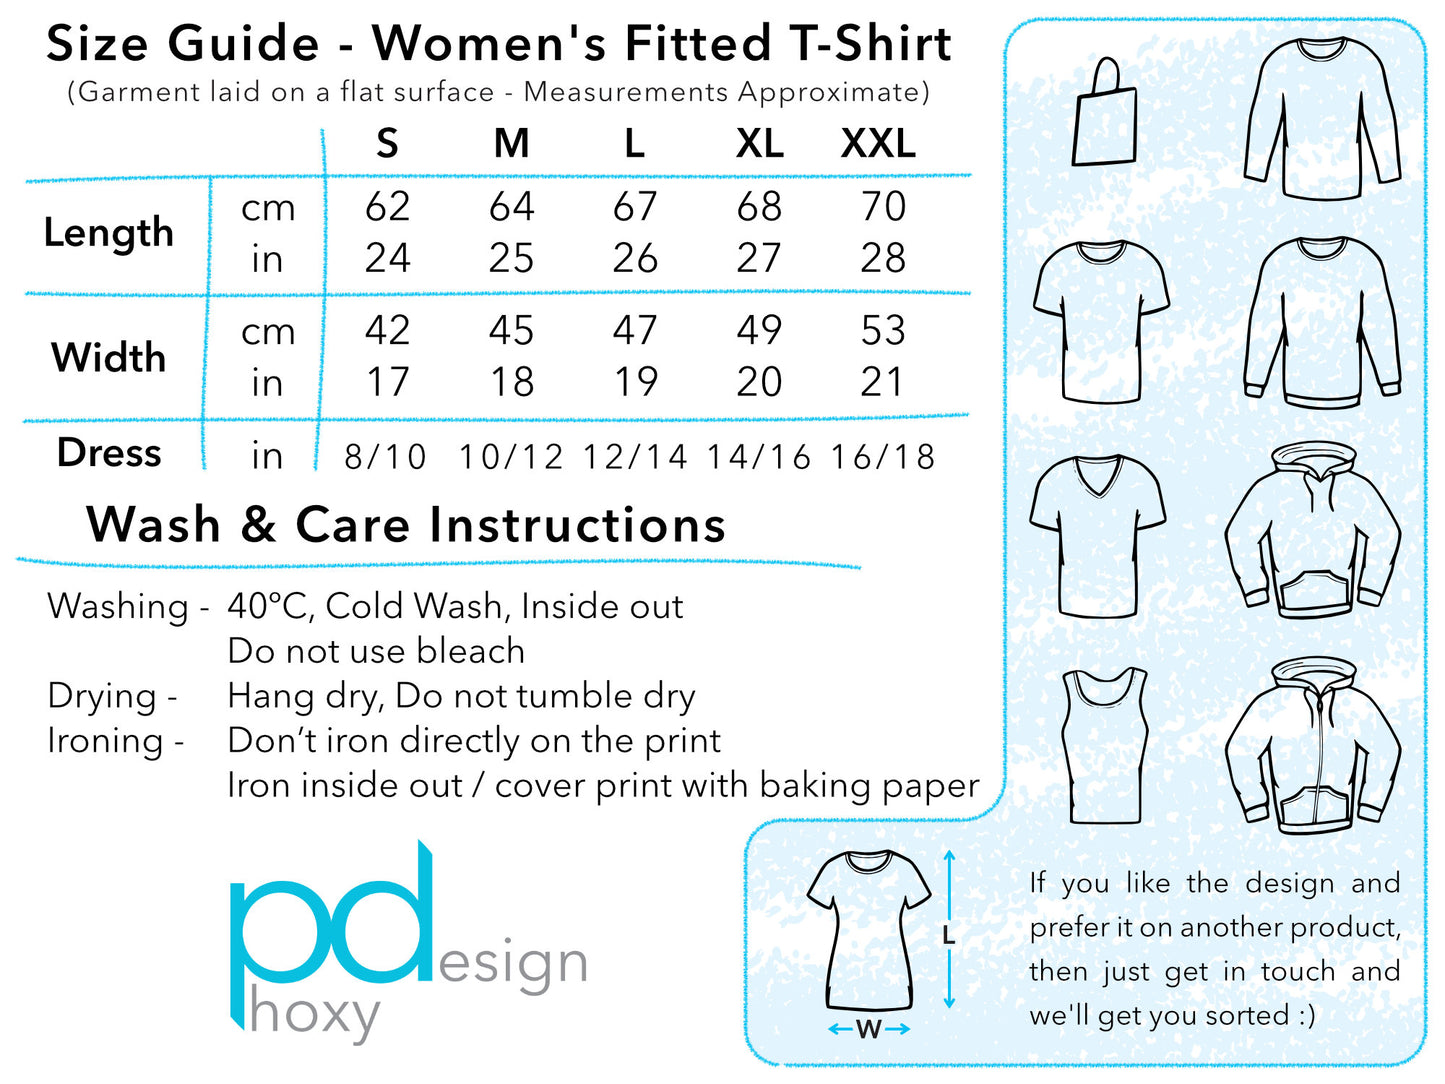 Mental Health Awareness Womens T-Shirt, It&#39;s OK Not To Be OK, Women&#39;s Fitted Jersey Short Sleeve T Shirt Tee Top